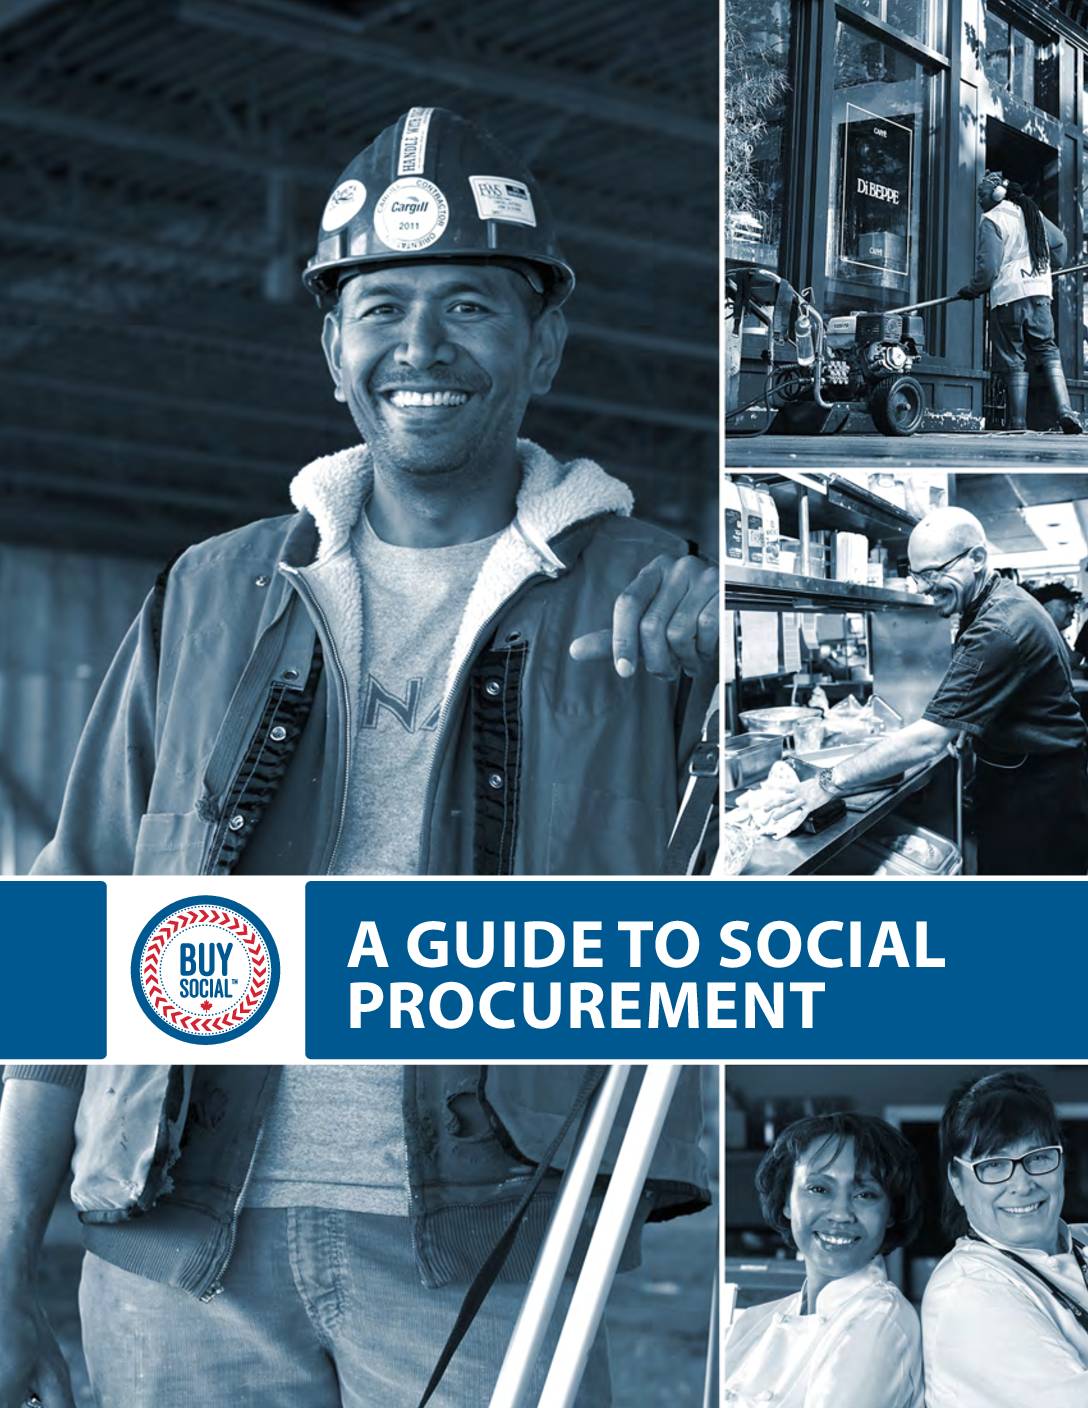 Buy Social Canada Guide to Social Procurement